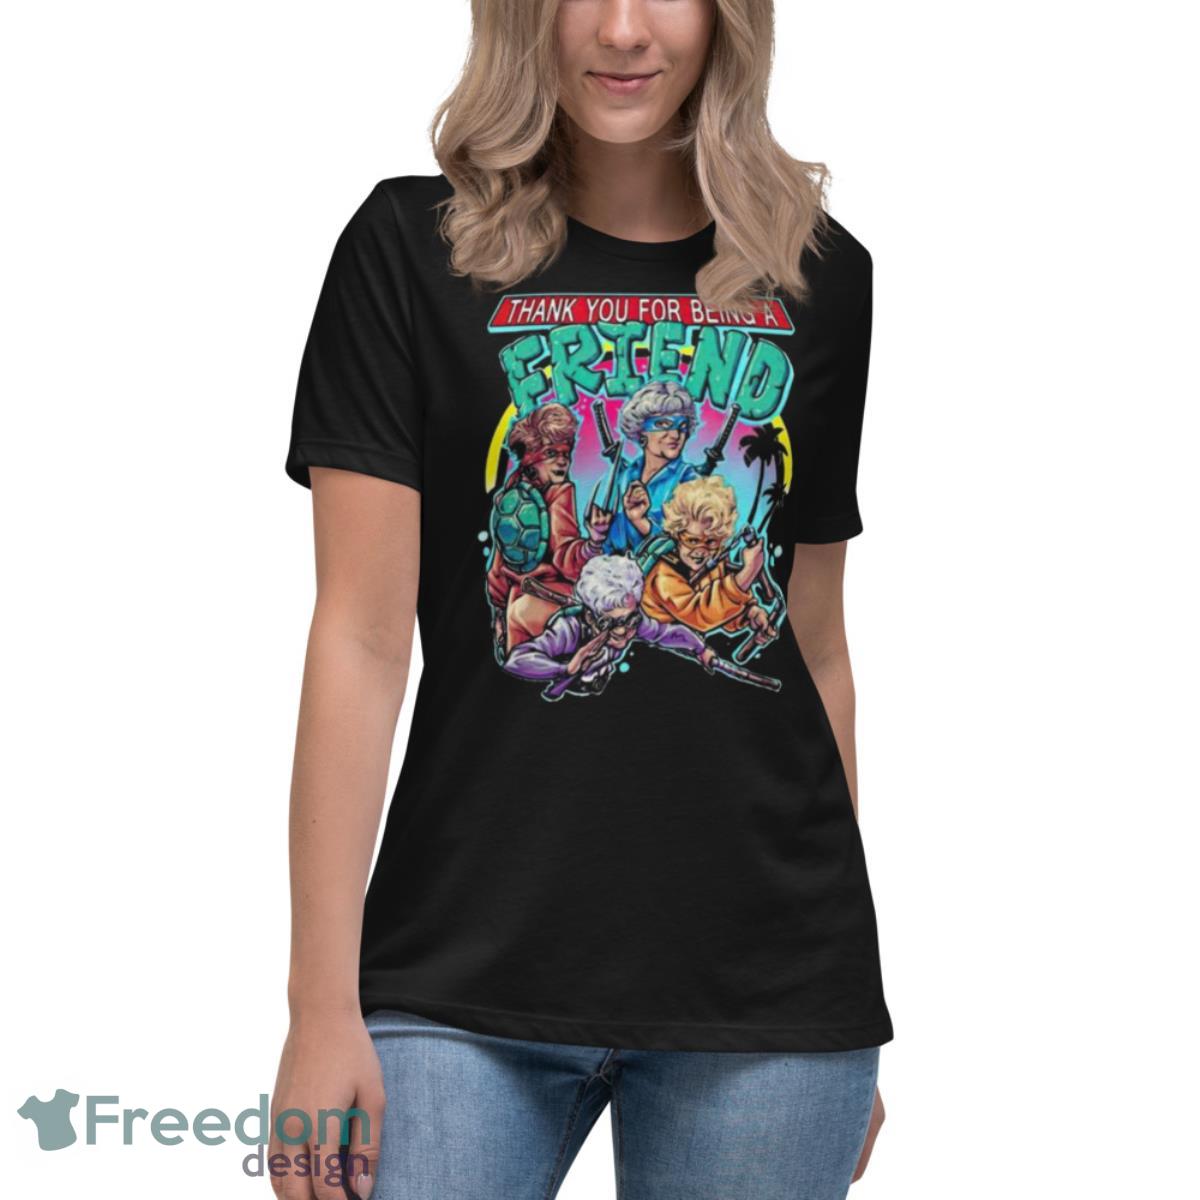 https://image.freedomdesignstore.com/2022/12/thank-you-for-being-a-friend-the-golden-girls-teenage-mutant-ninja-turtle-shirt-5.jpeg